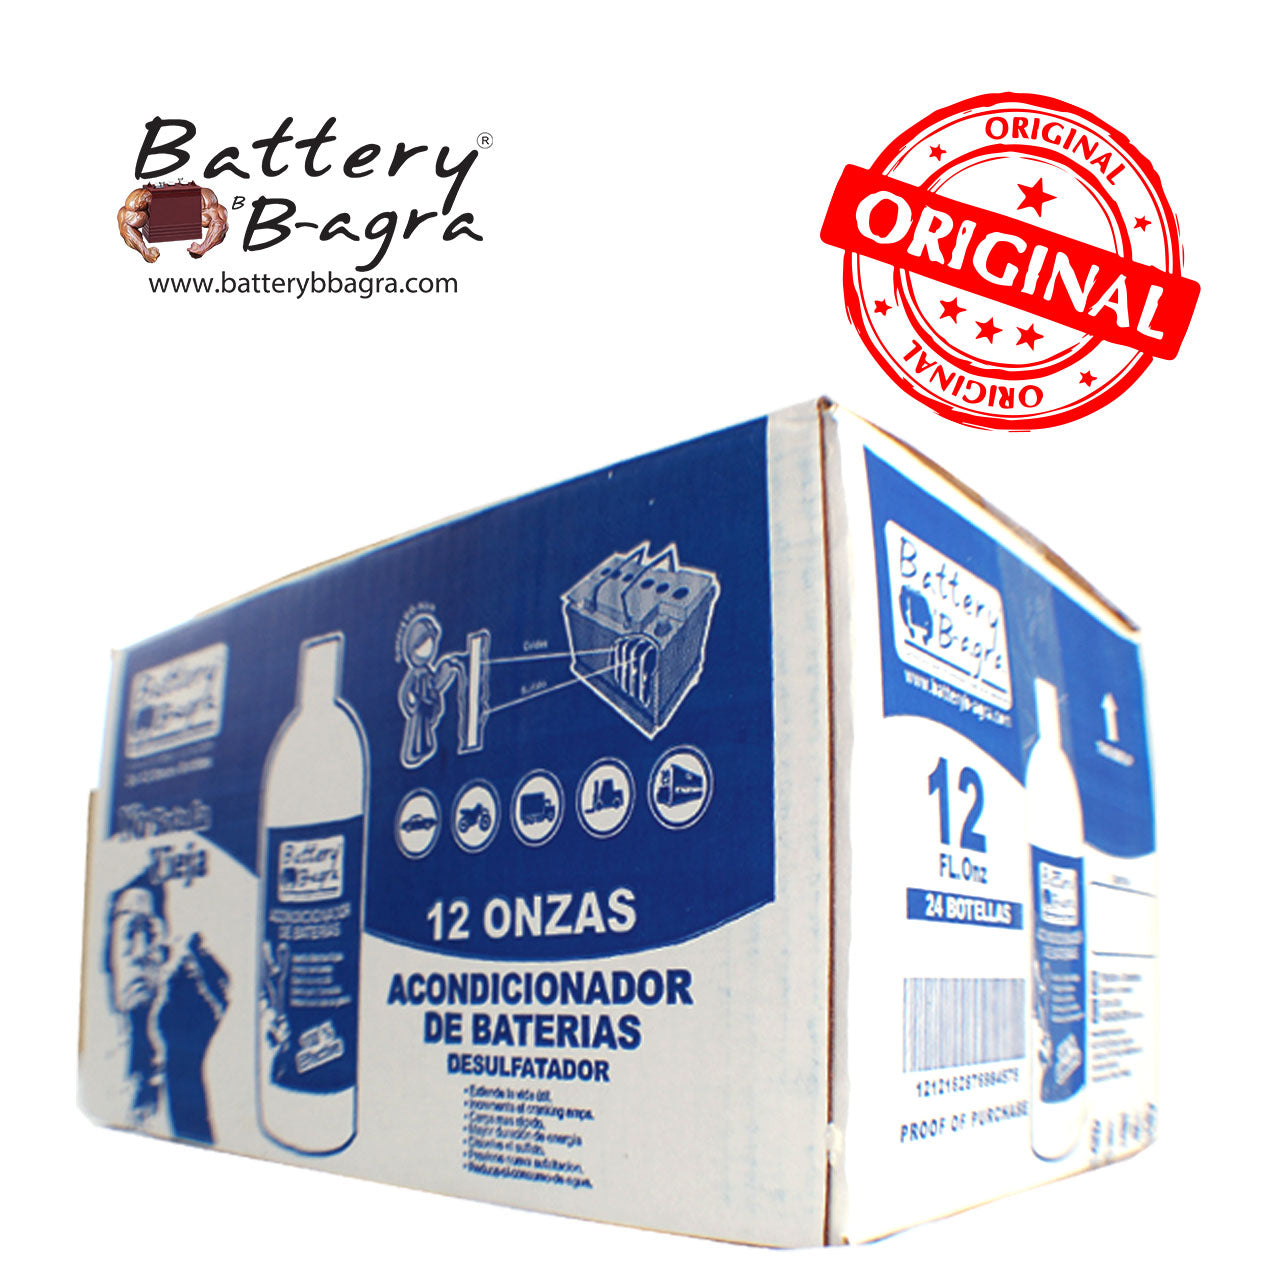 Caja de 12 Onz - Battery Bb-agra